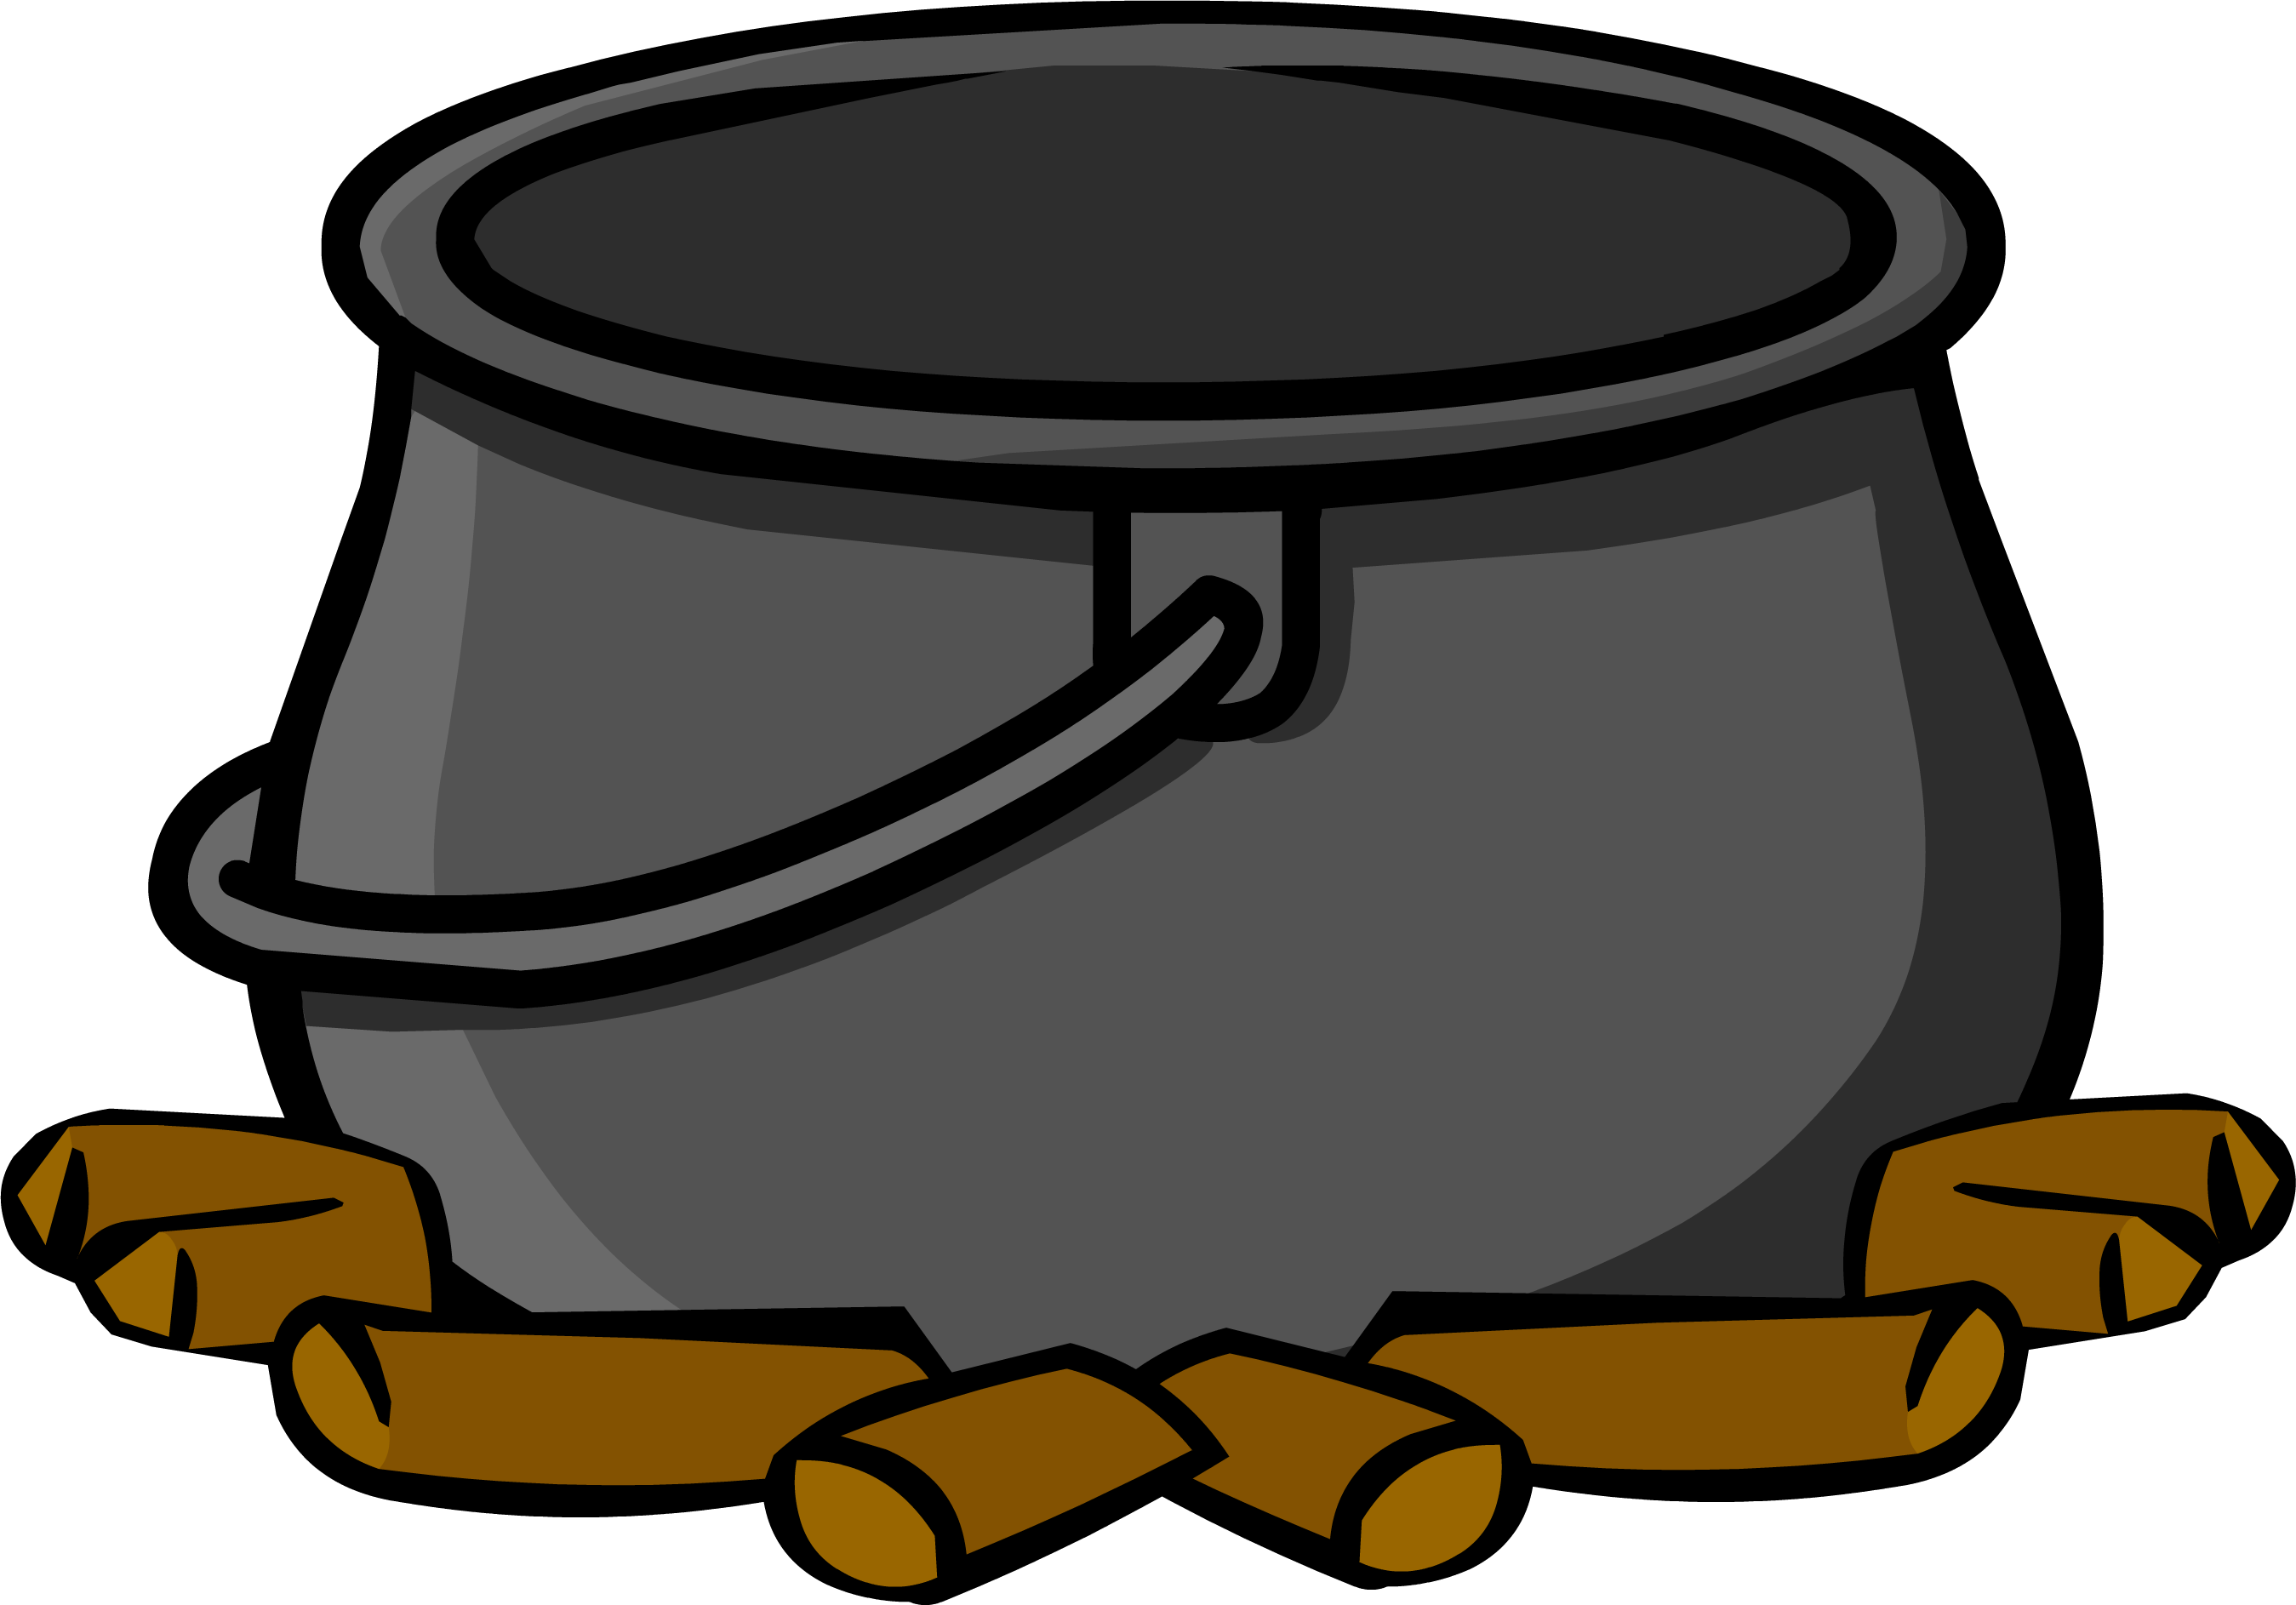 cauldron clipart empty clipart, transparent - 180.81Kb 2698x1886.